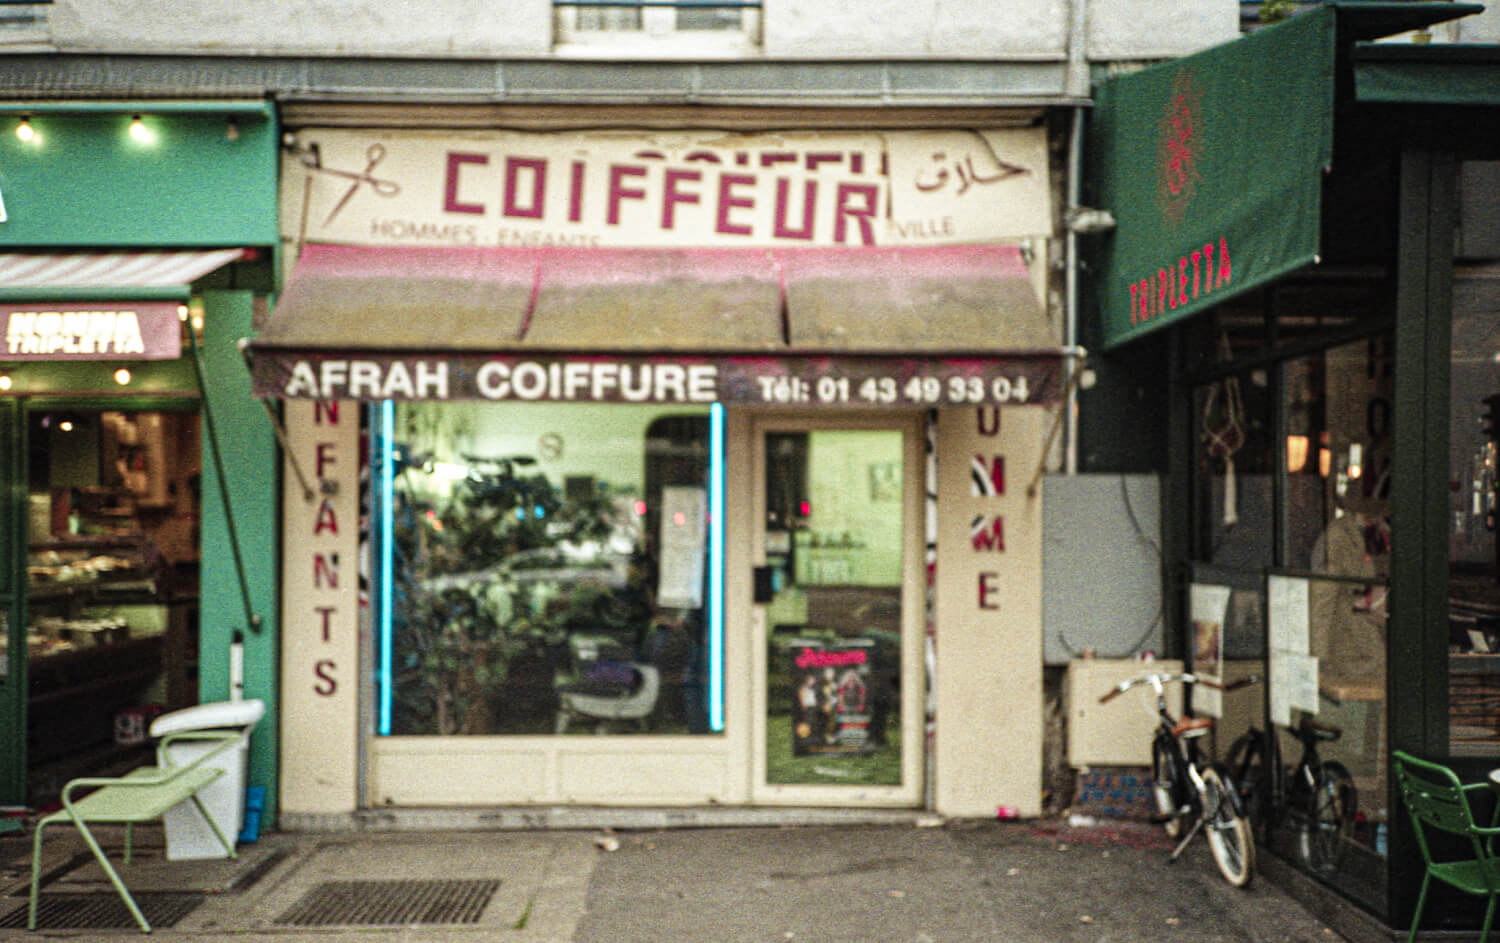 Travelogue: Fujicolor in Paris on a Nikon L35AF - by Mark John Hiemstra